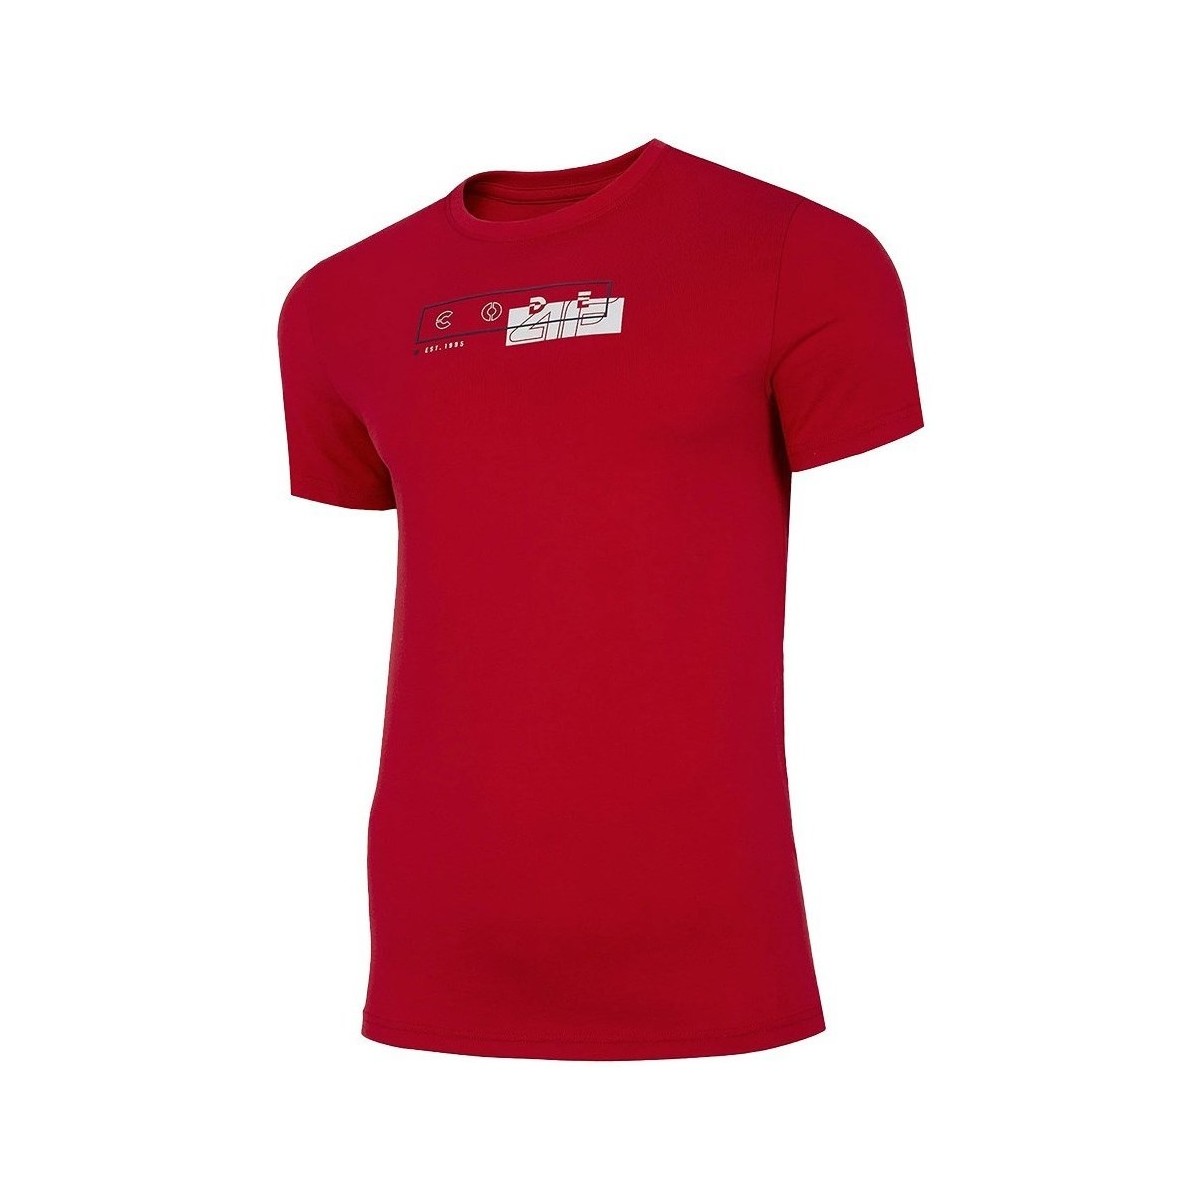 Kleidung Herren T-Shirts 4F TSM021 Rot